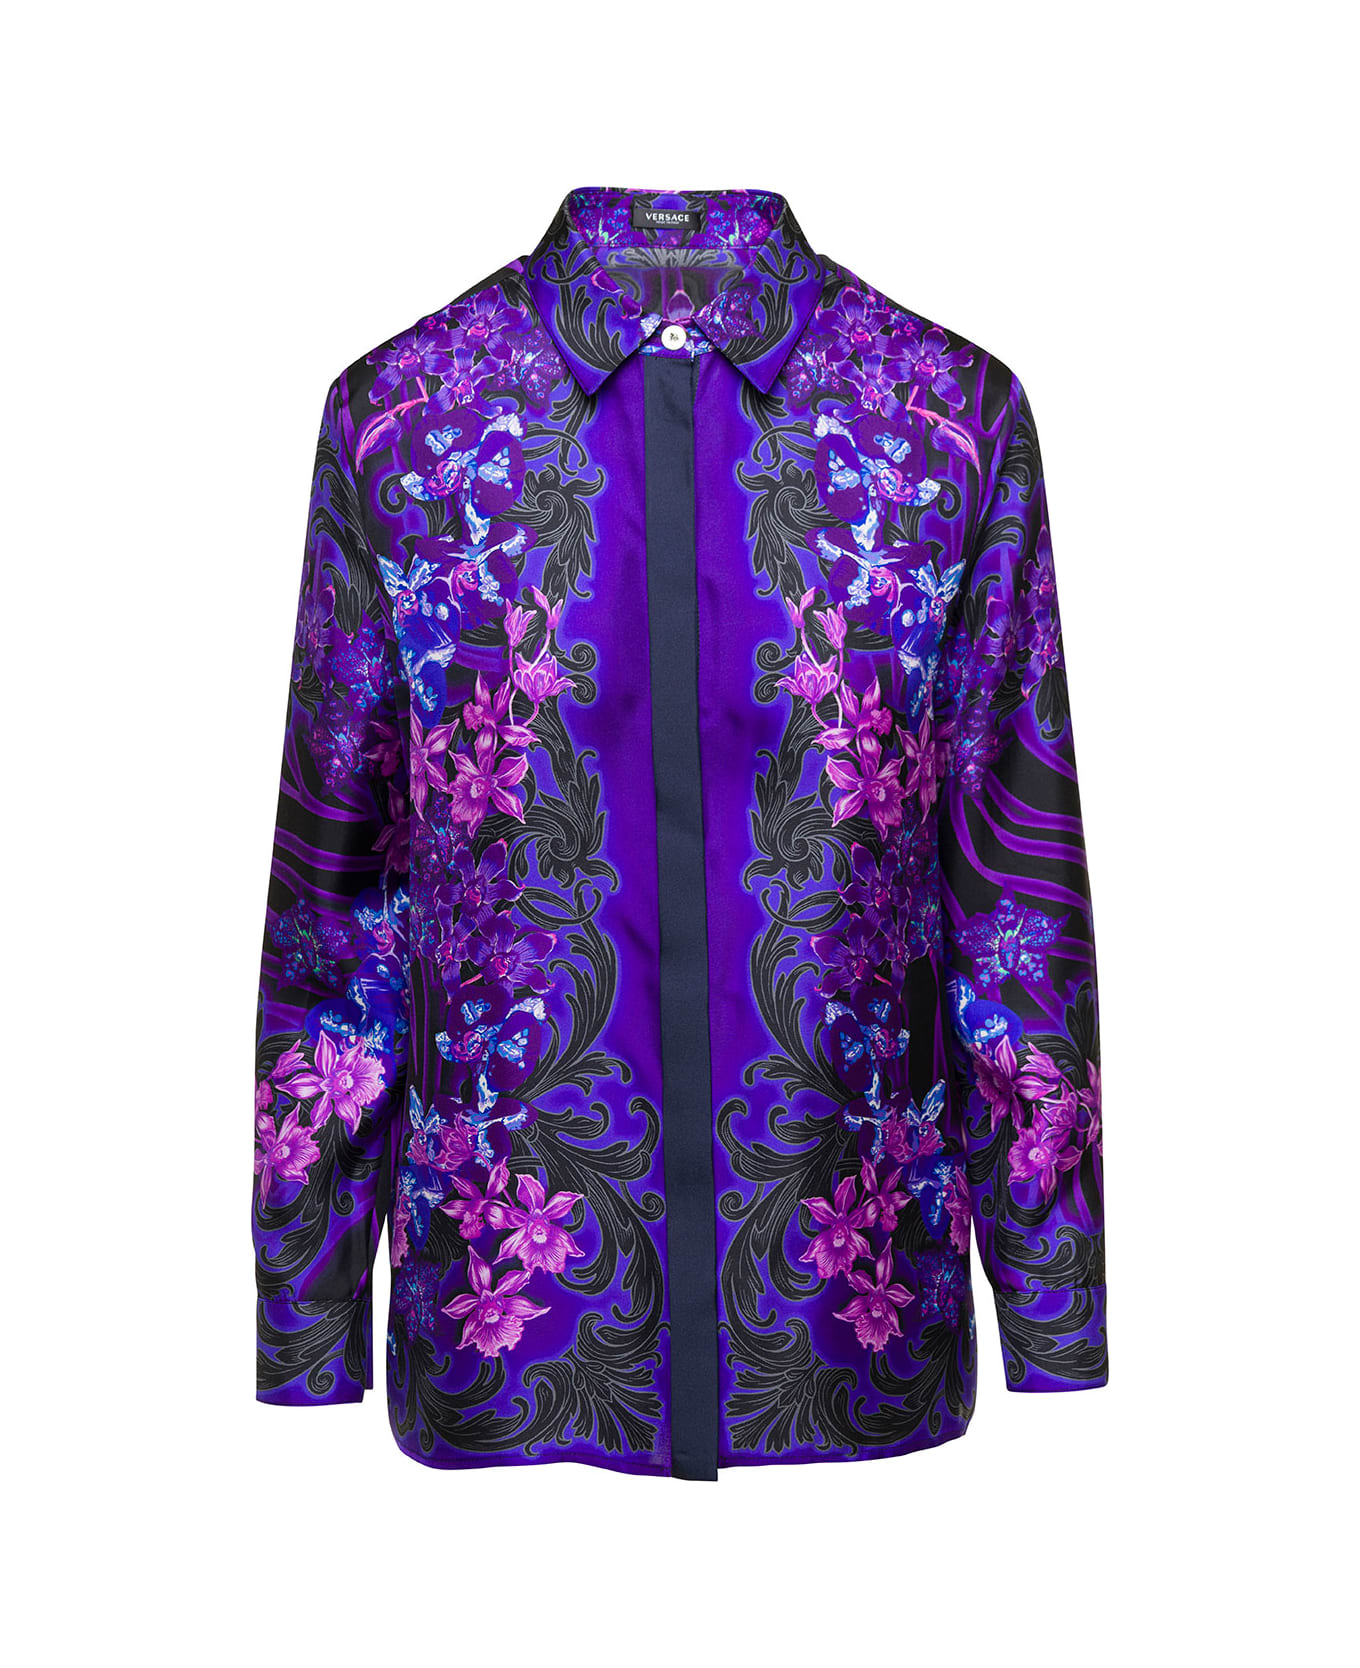 Versace Camicia Con Stampa Orchidee Barocca Viola In Seta Donna - Violet